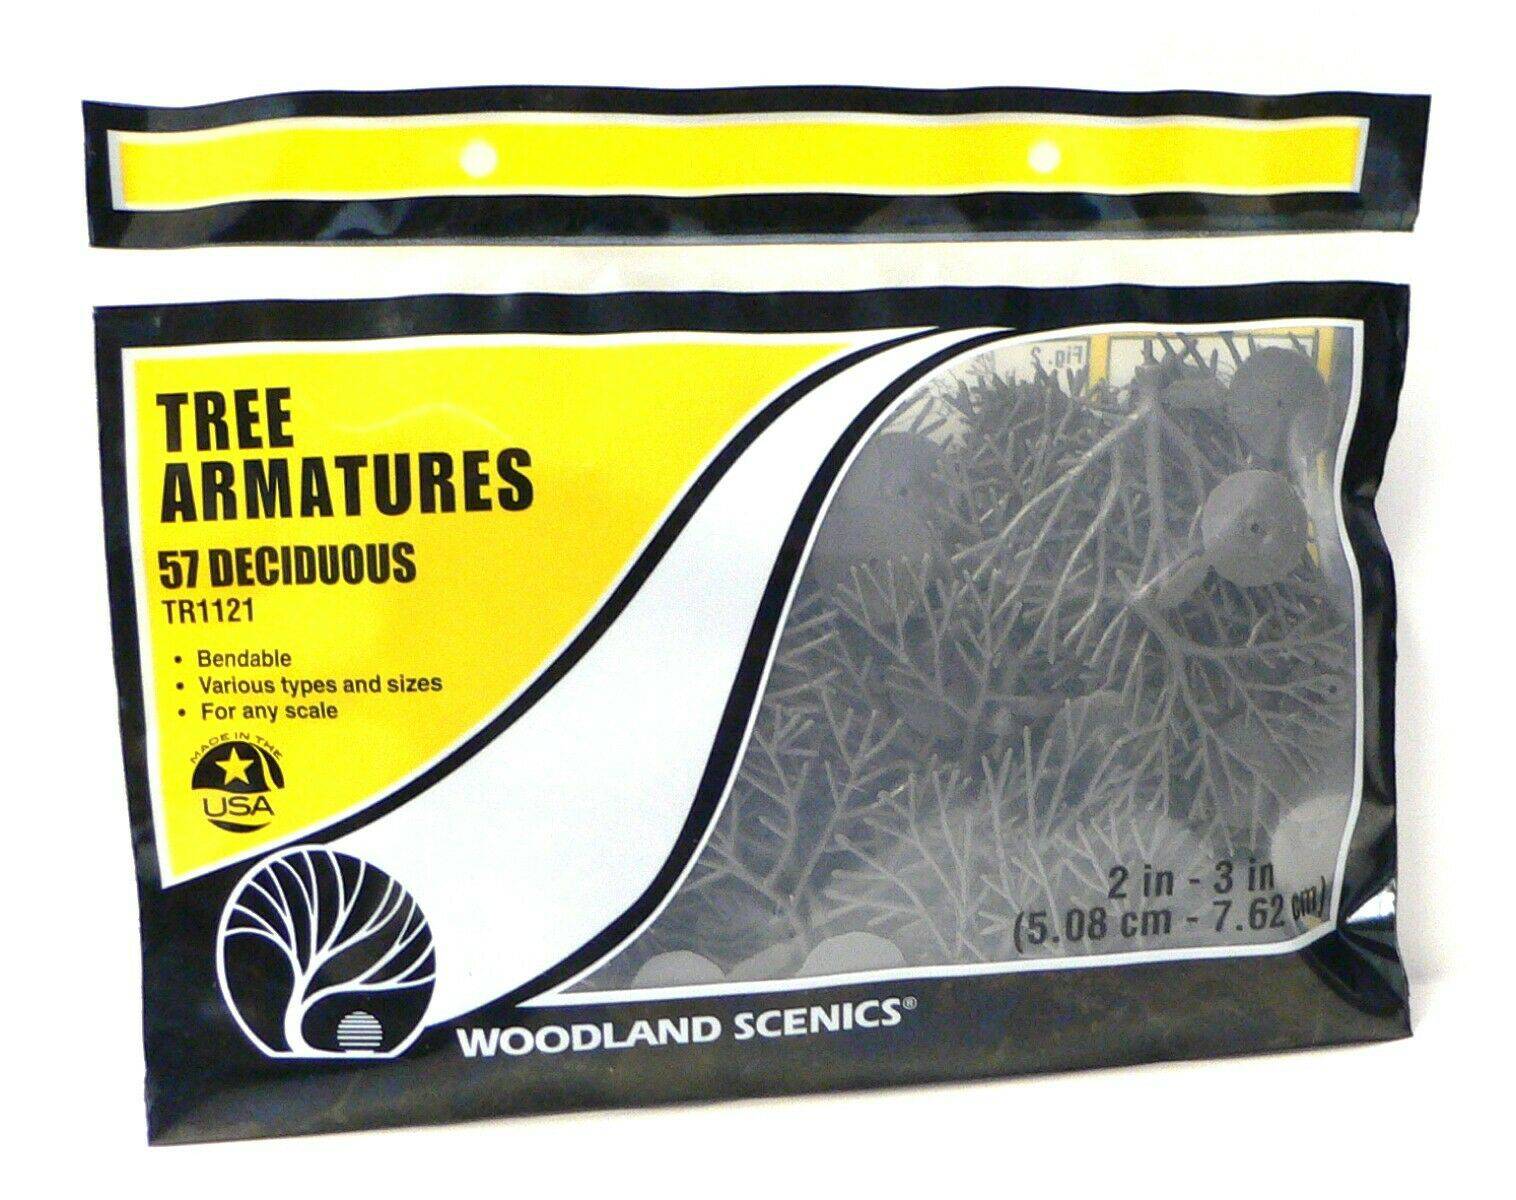 Woodland Scenics - TREE ARMATURES TR1121 - 57 DECIDUOUS - Aussie Hobbies 